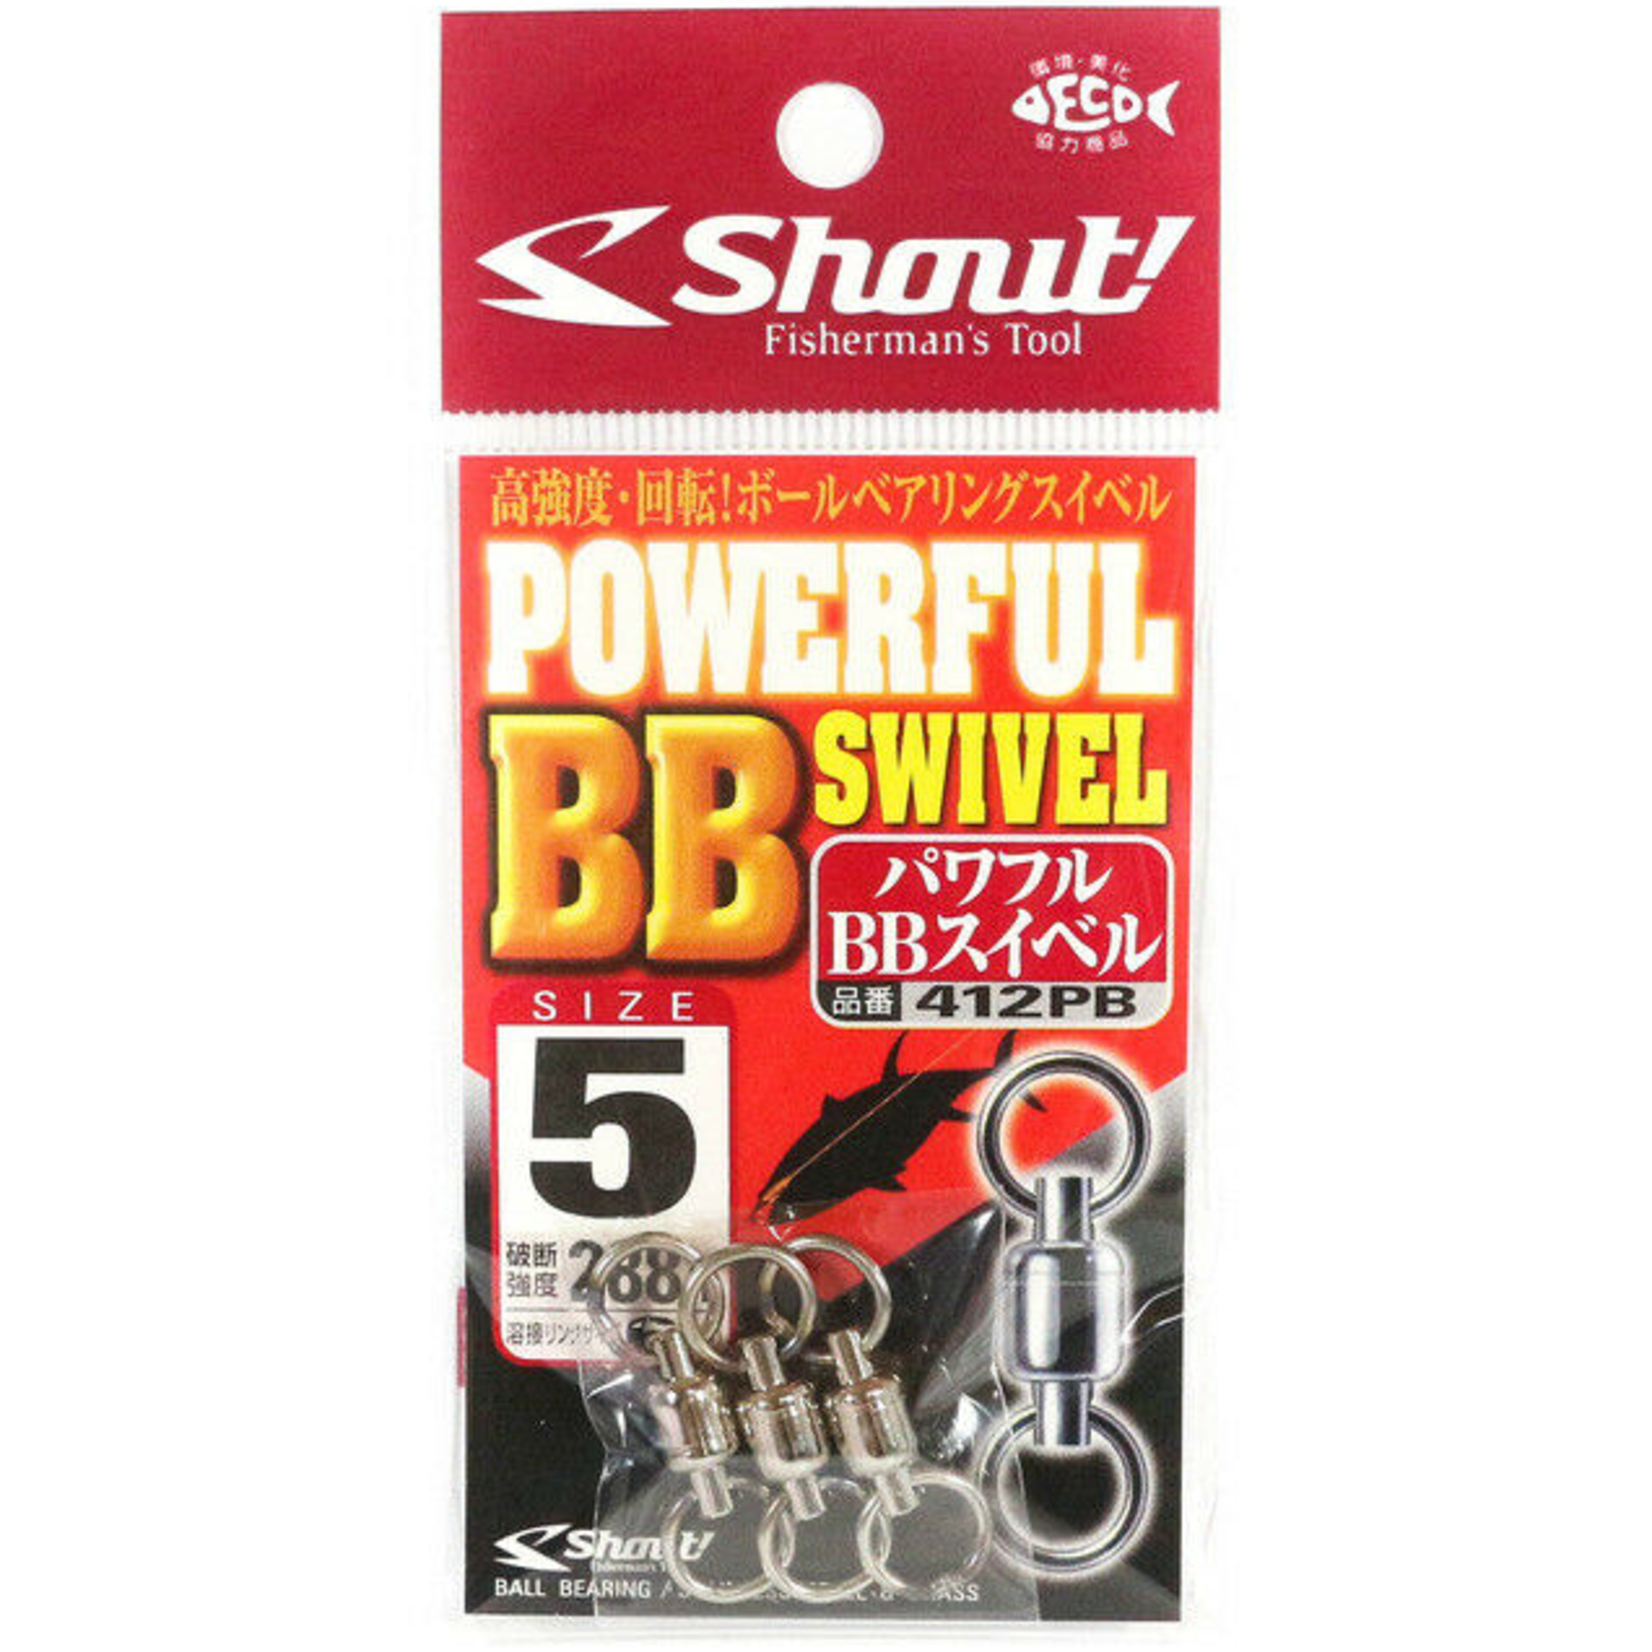 Shout POWERFUL BB SWIVEL